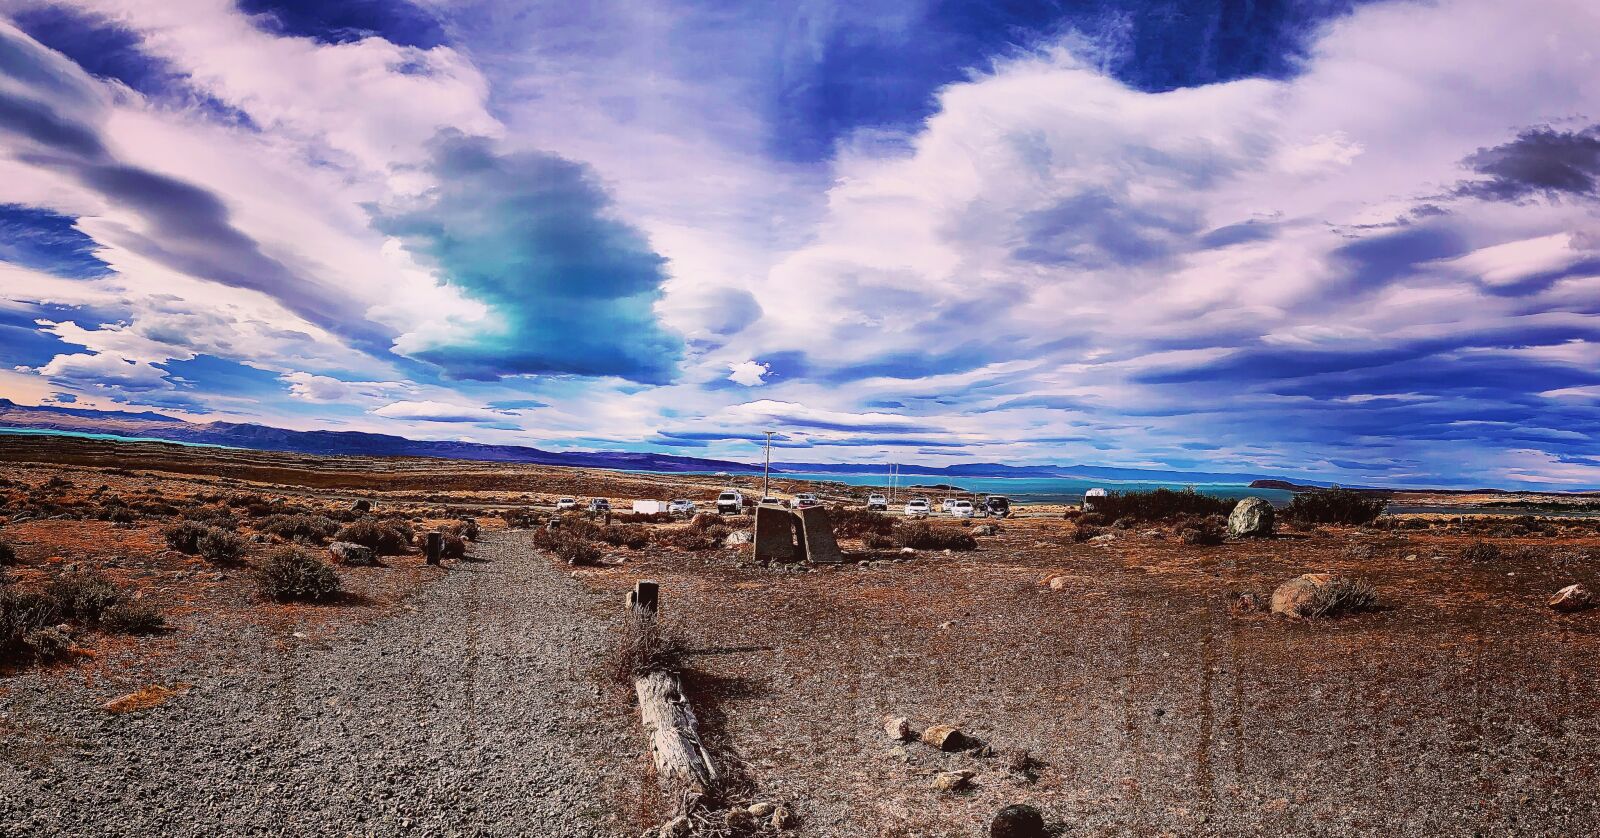 iPhone XS back camera 4.25mm f/1.8 sample photo. El calafate, argentina, nature photography